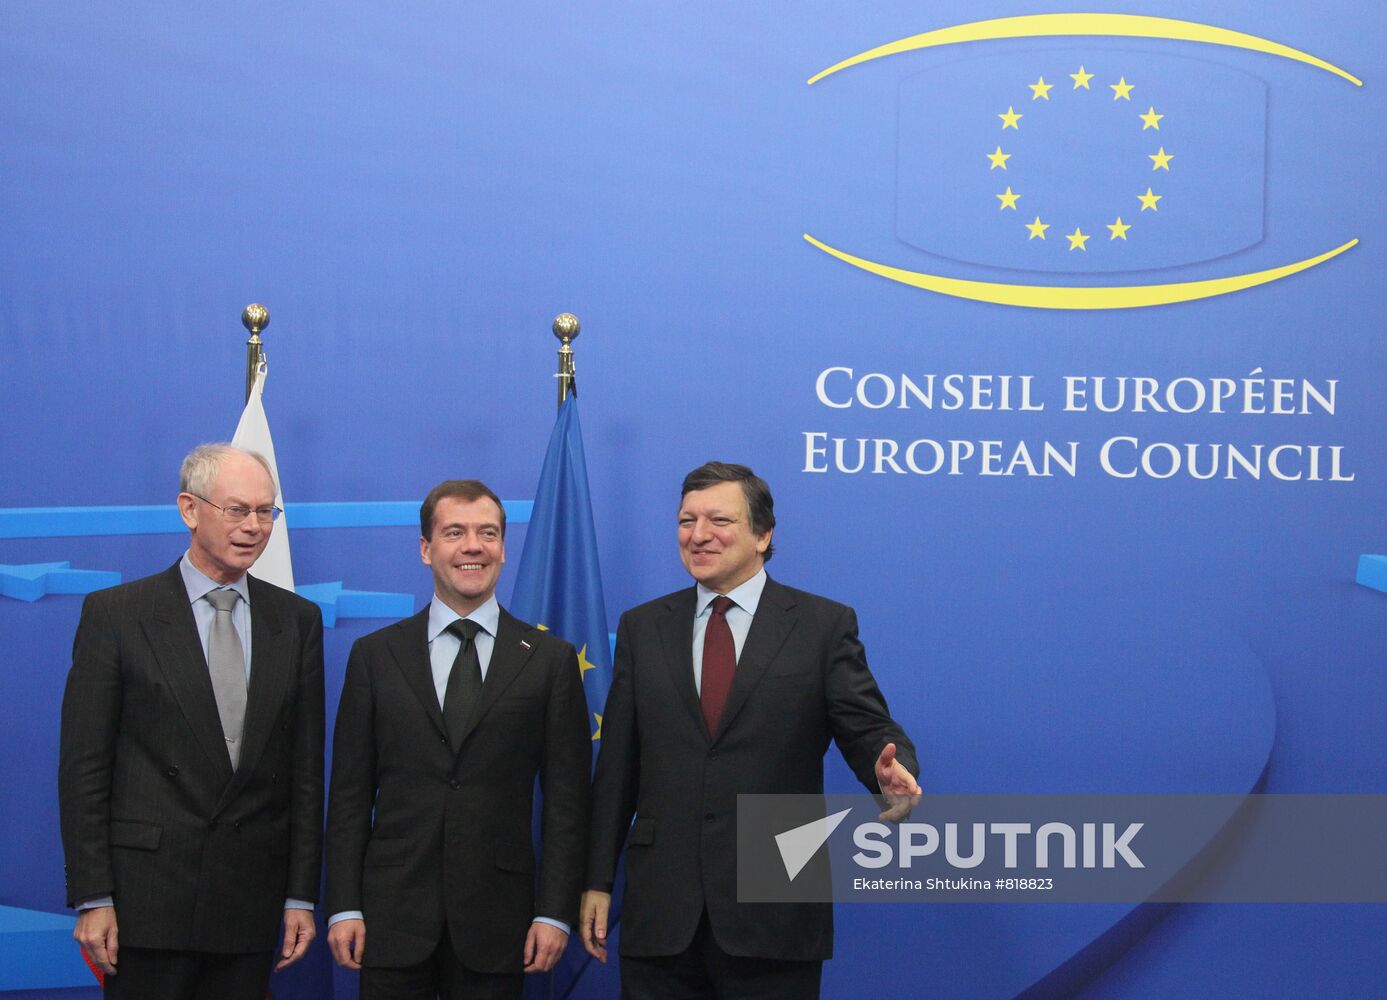 Dmitry Medvedev arrives in Brussels for Russia-EU summit